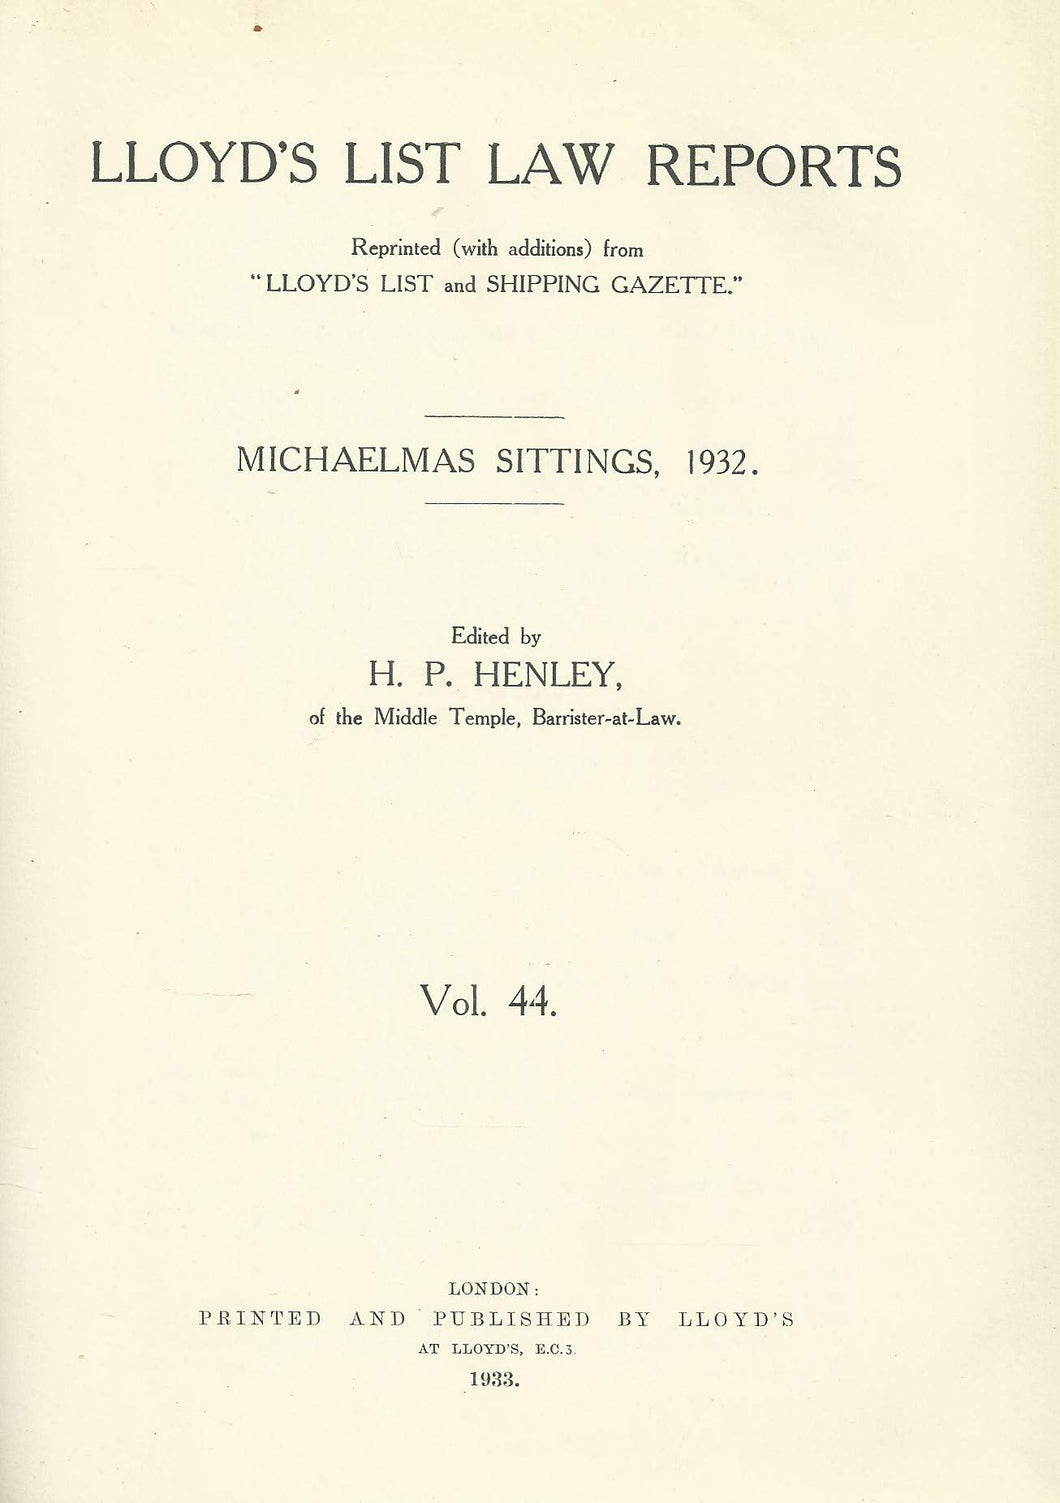 Lloyd's List Law Reports - Volume 44, Michaelmas Sittings, 1932